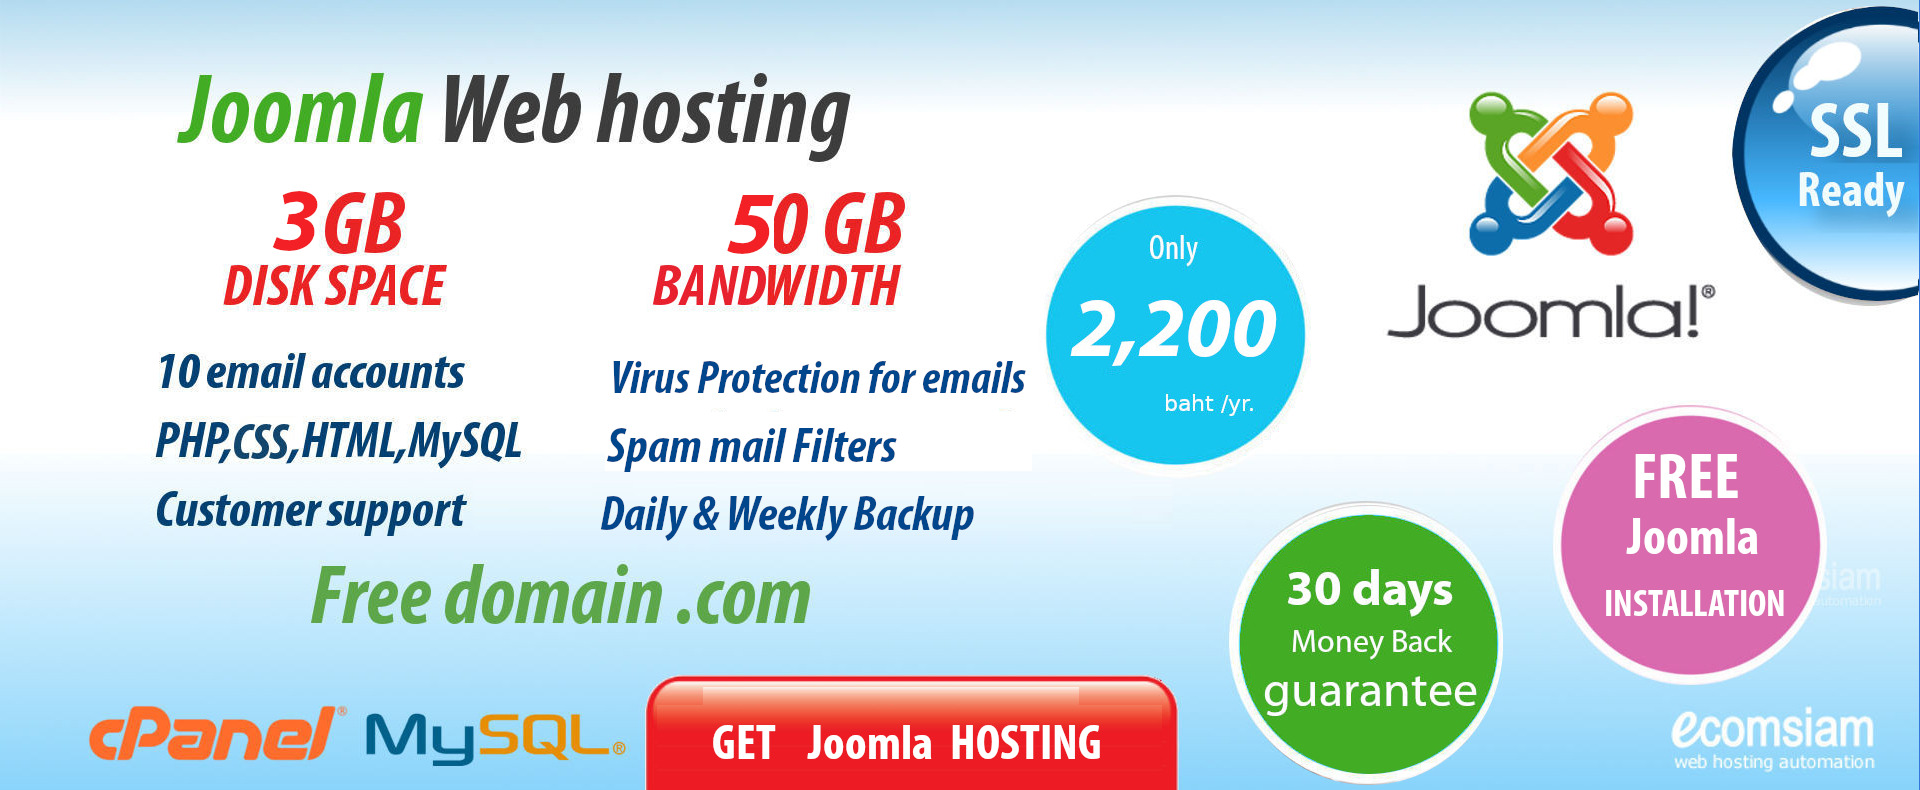 joomla web hosting thailand ฟรีโดเมน ฟรี SSL เว็บโฮสติ้งไทย ราคาเบาๆ เริ่มต้นเพียง 2200 บาทต่อปี บริการลูกค้า ดูแลดีโดย ecomsiam.com